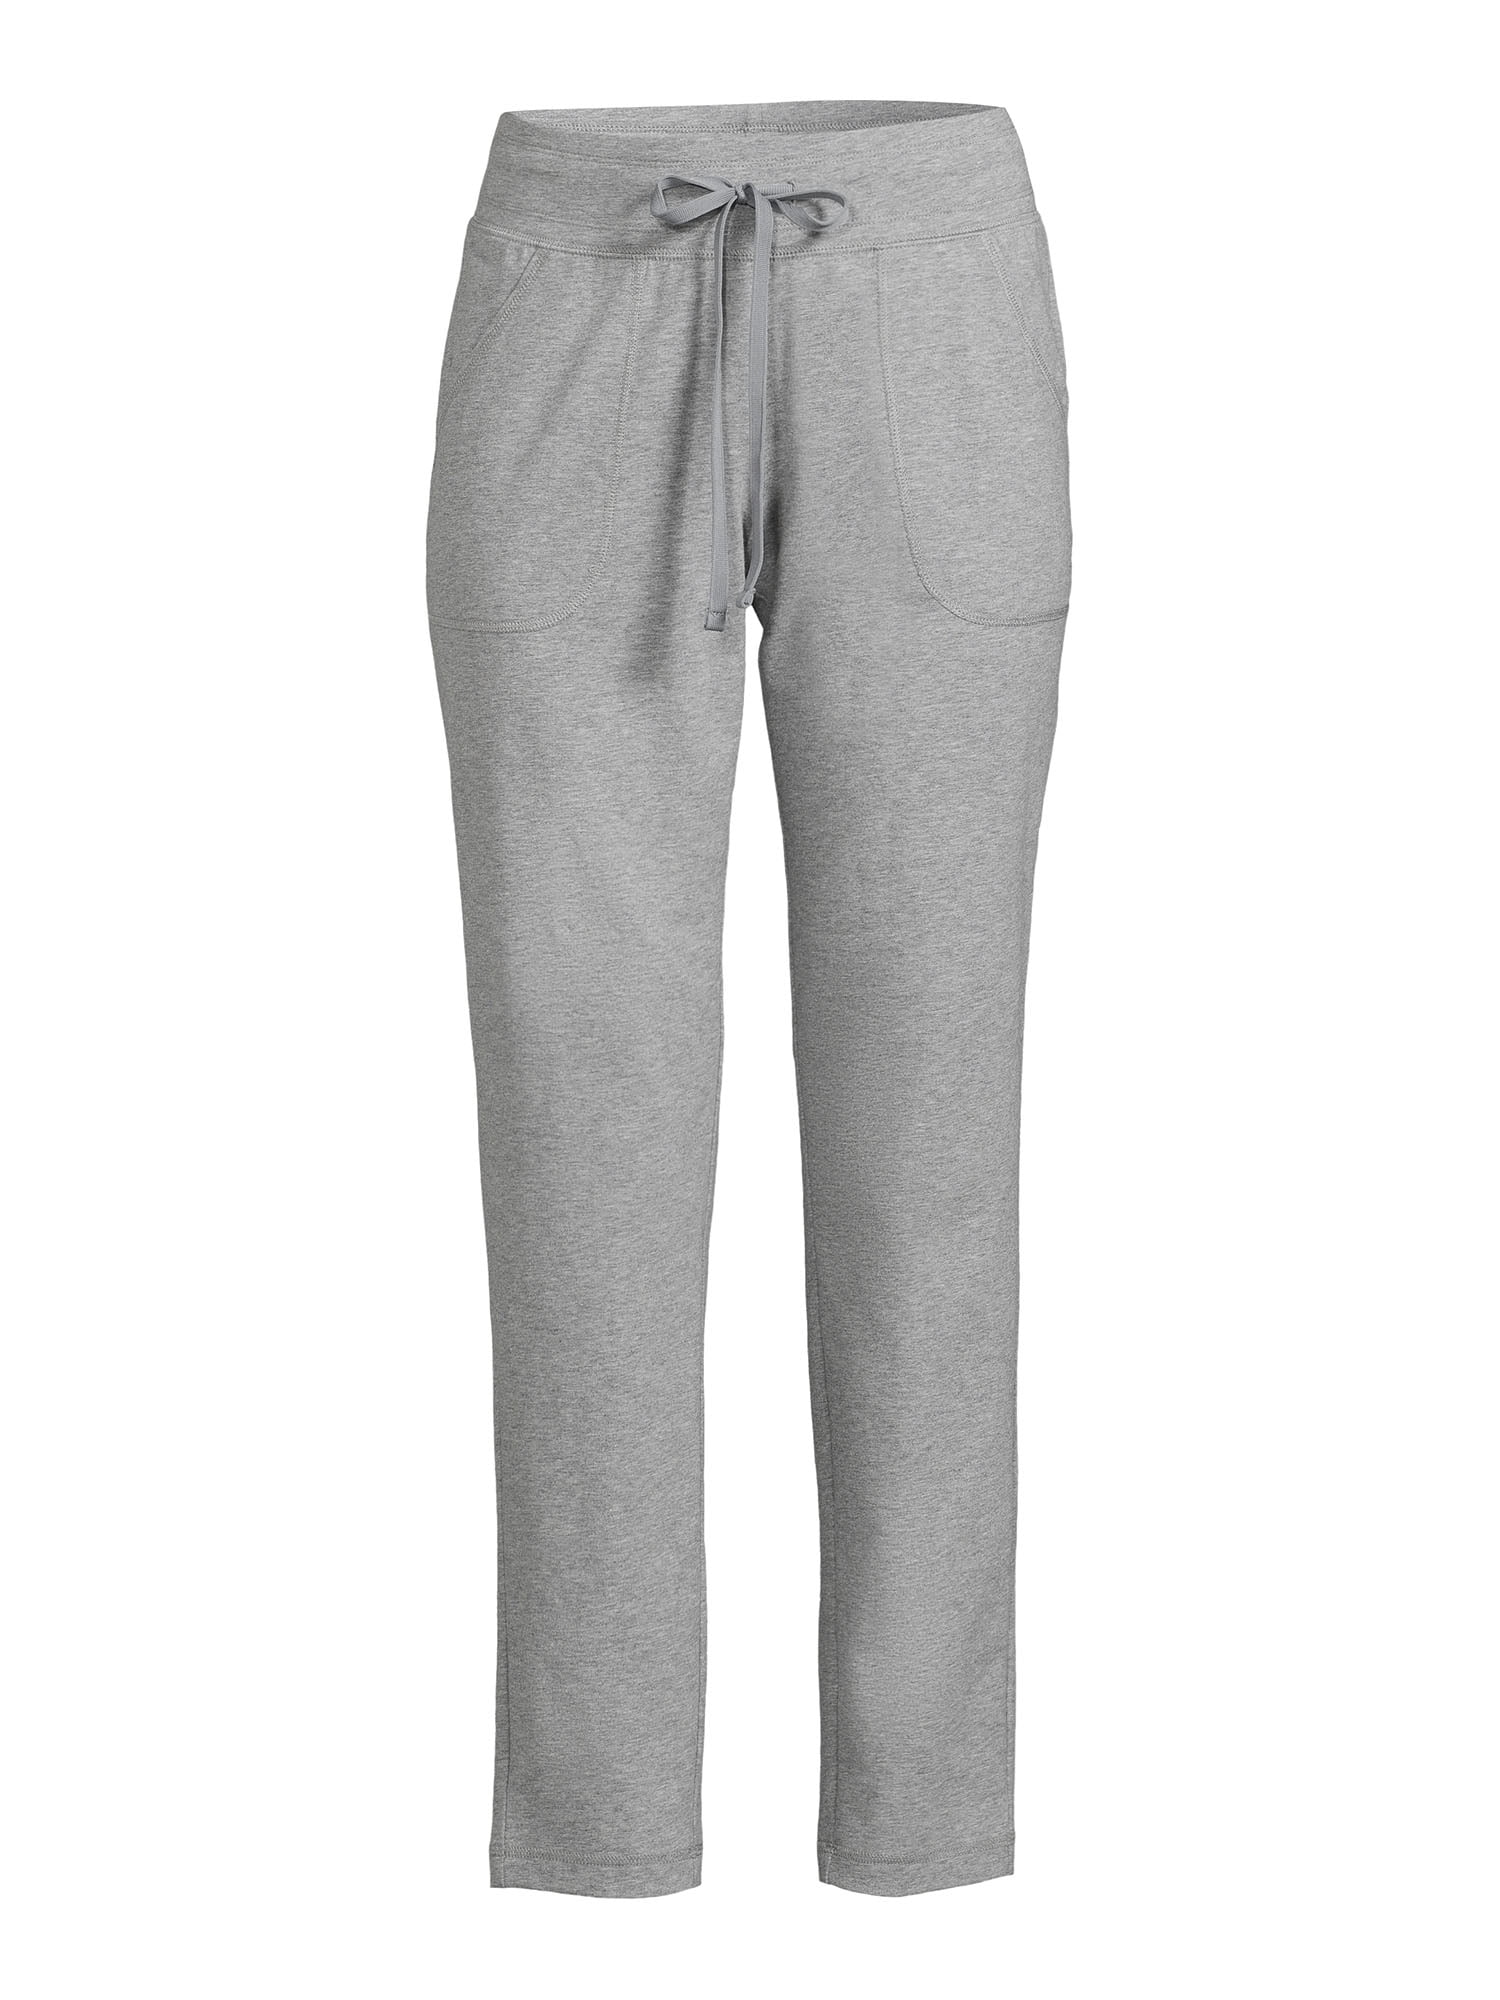 Athletic Work Women's Core Knit Pants 16-18 Grey